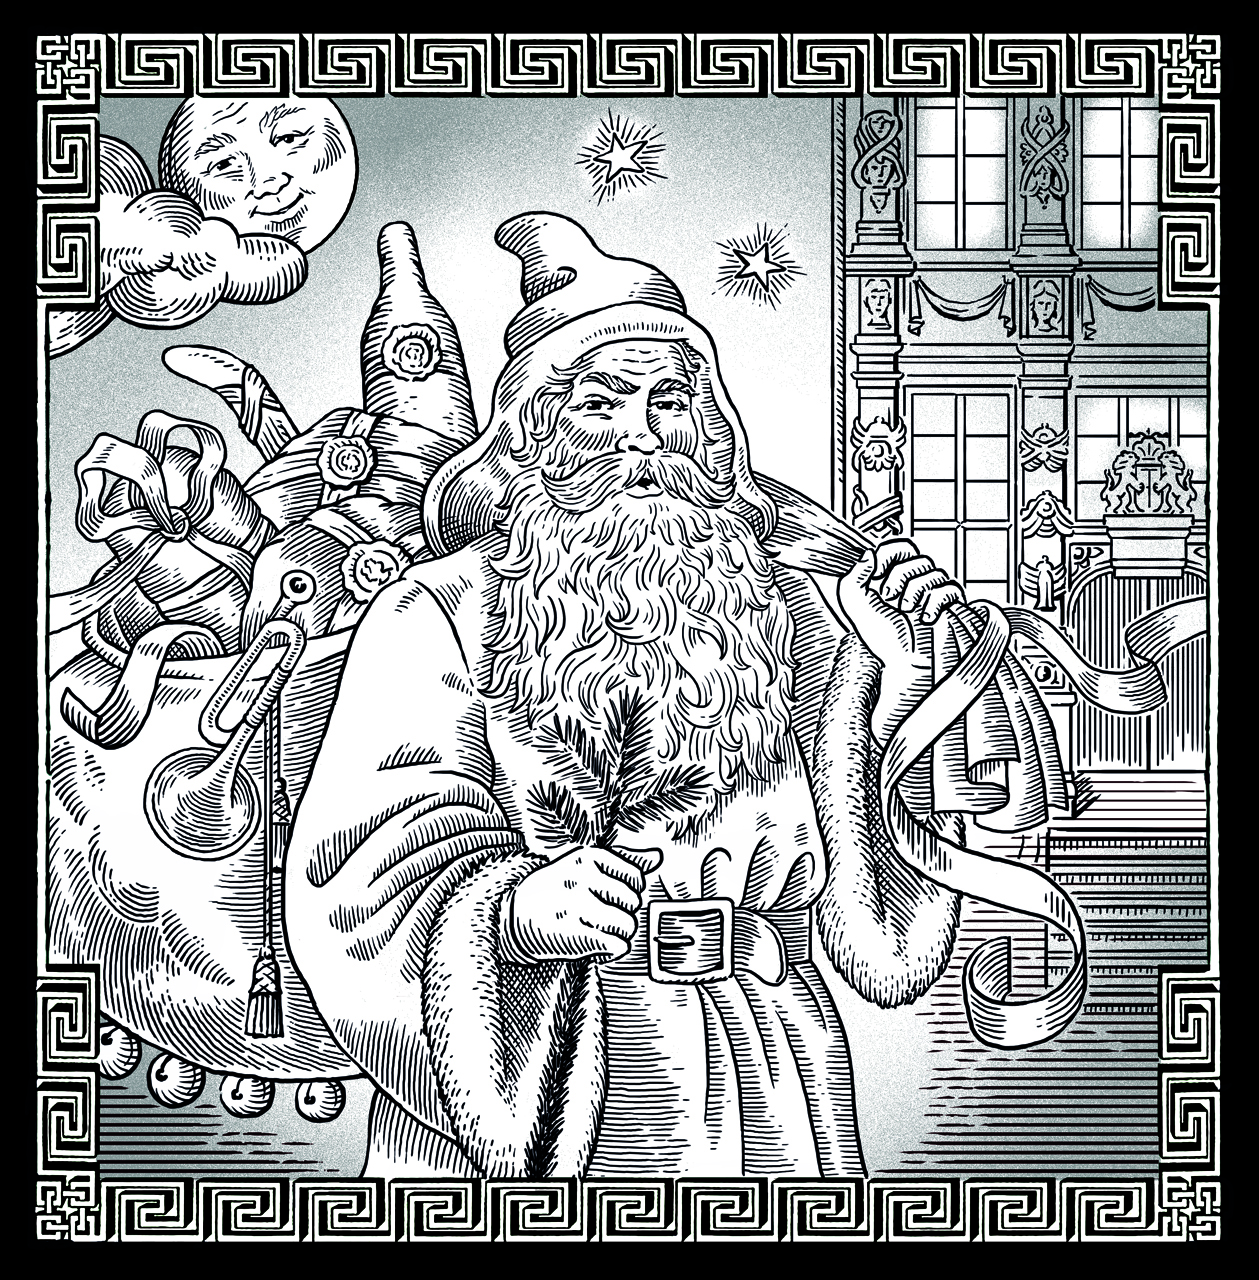 Illustration label Goder Aftonglögg with santa Claus.